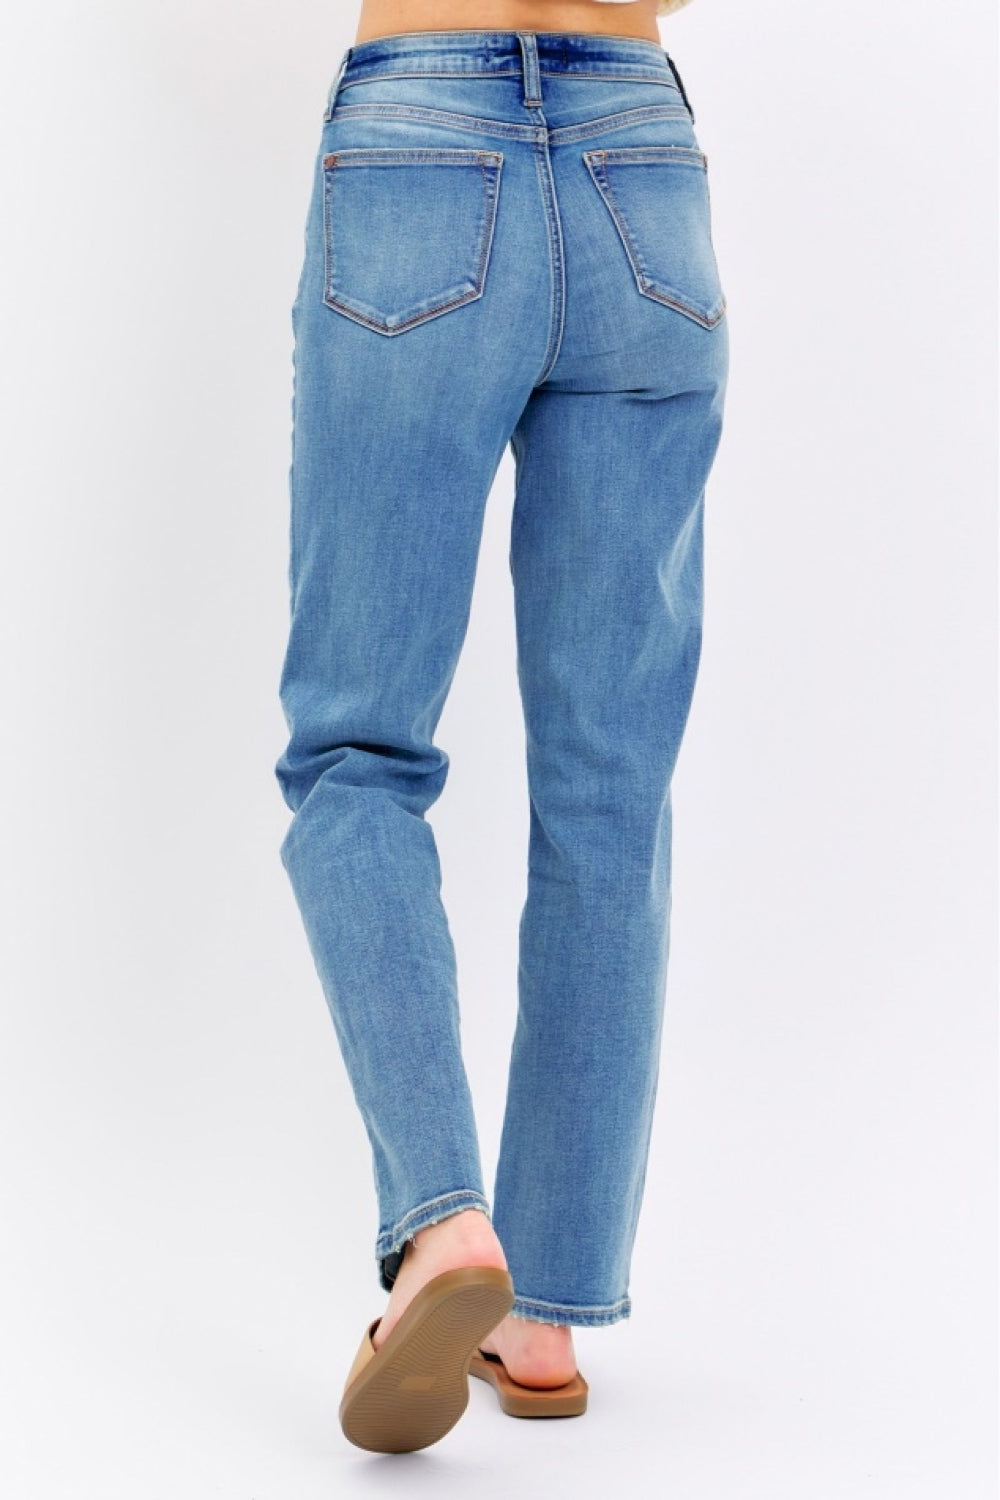 Judy Blue Full Size High Waist Straight Jeans Pants